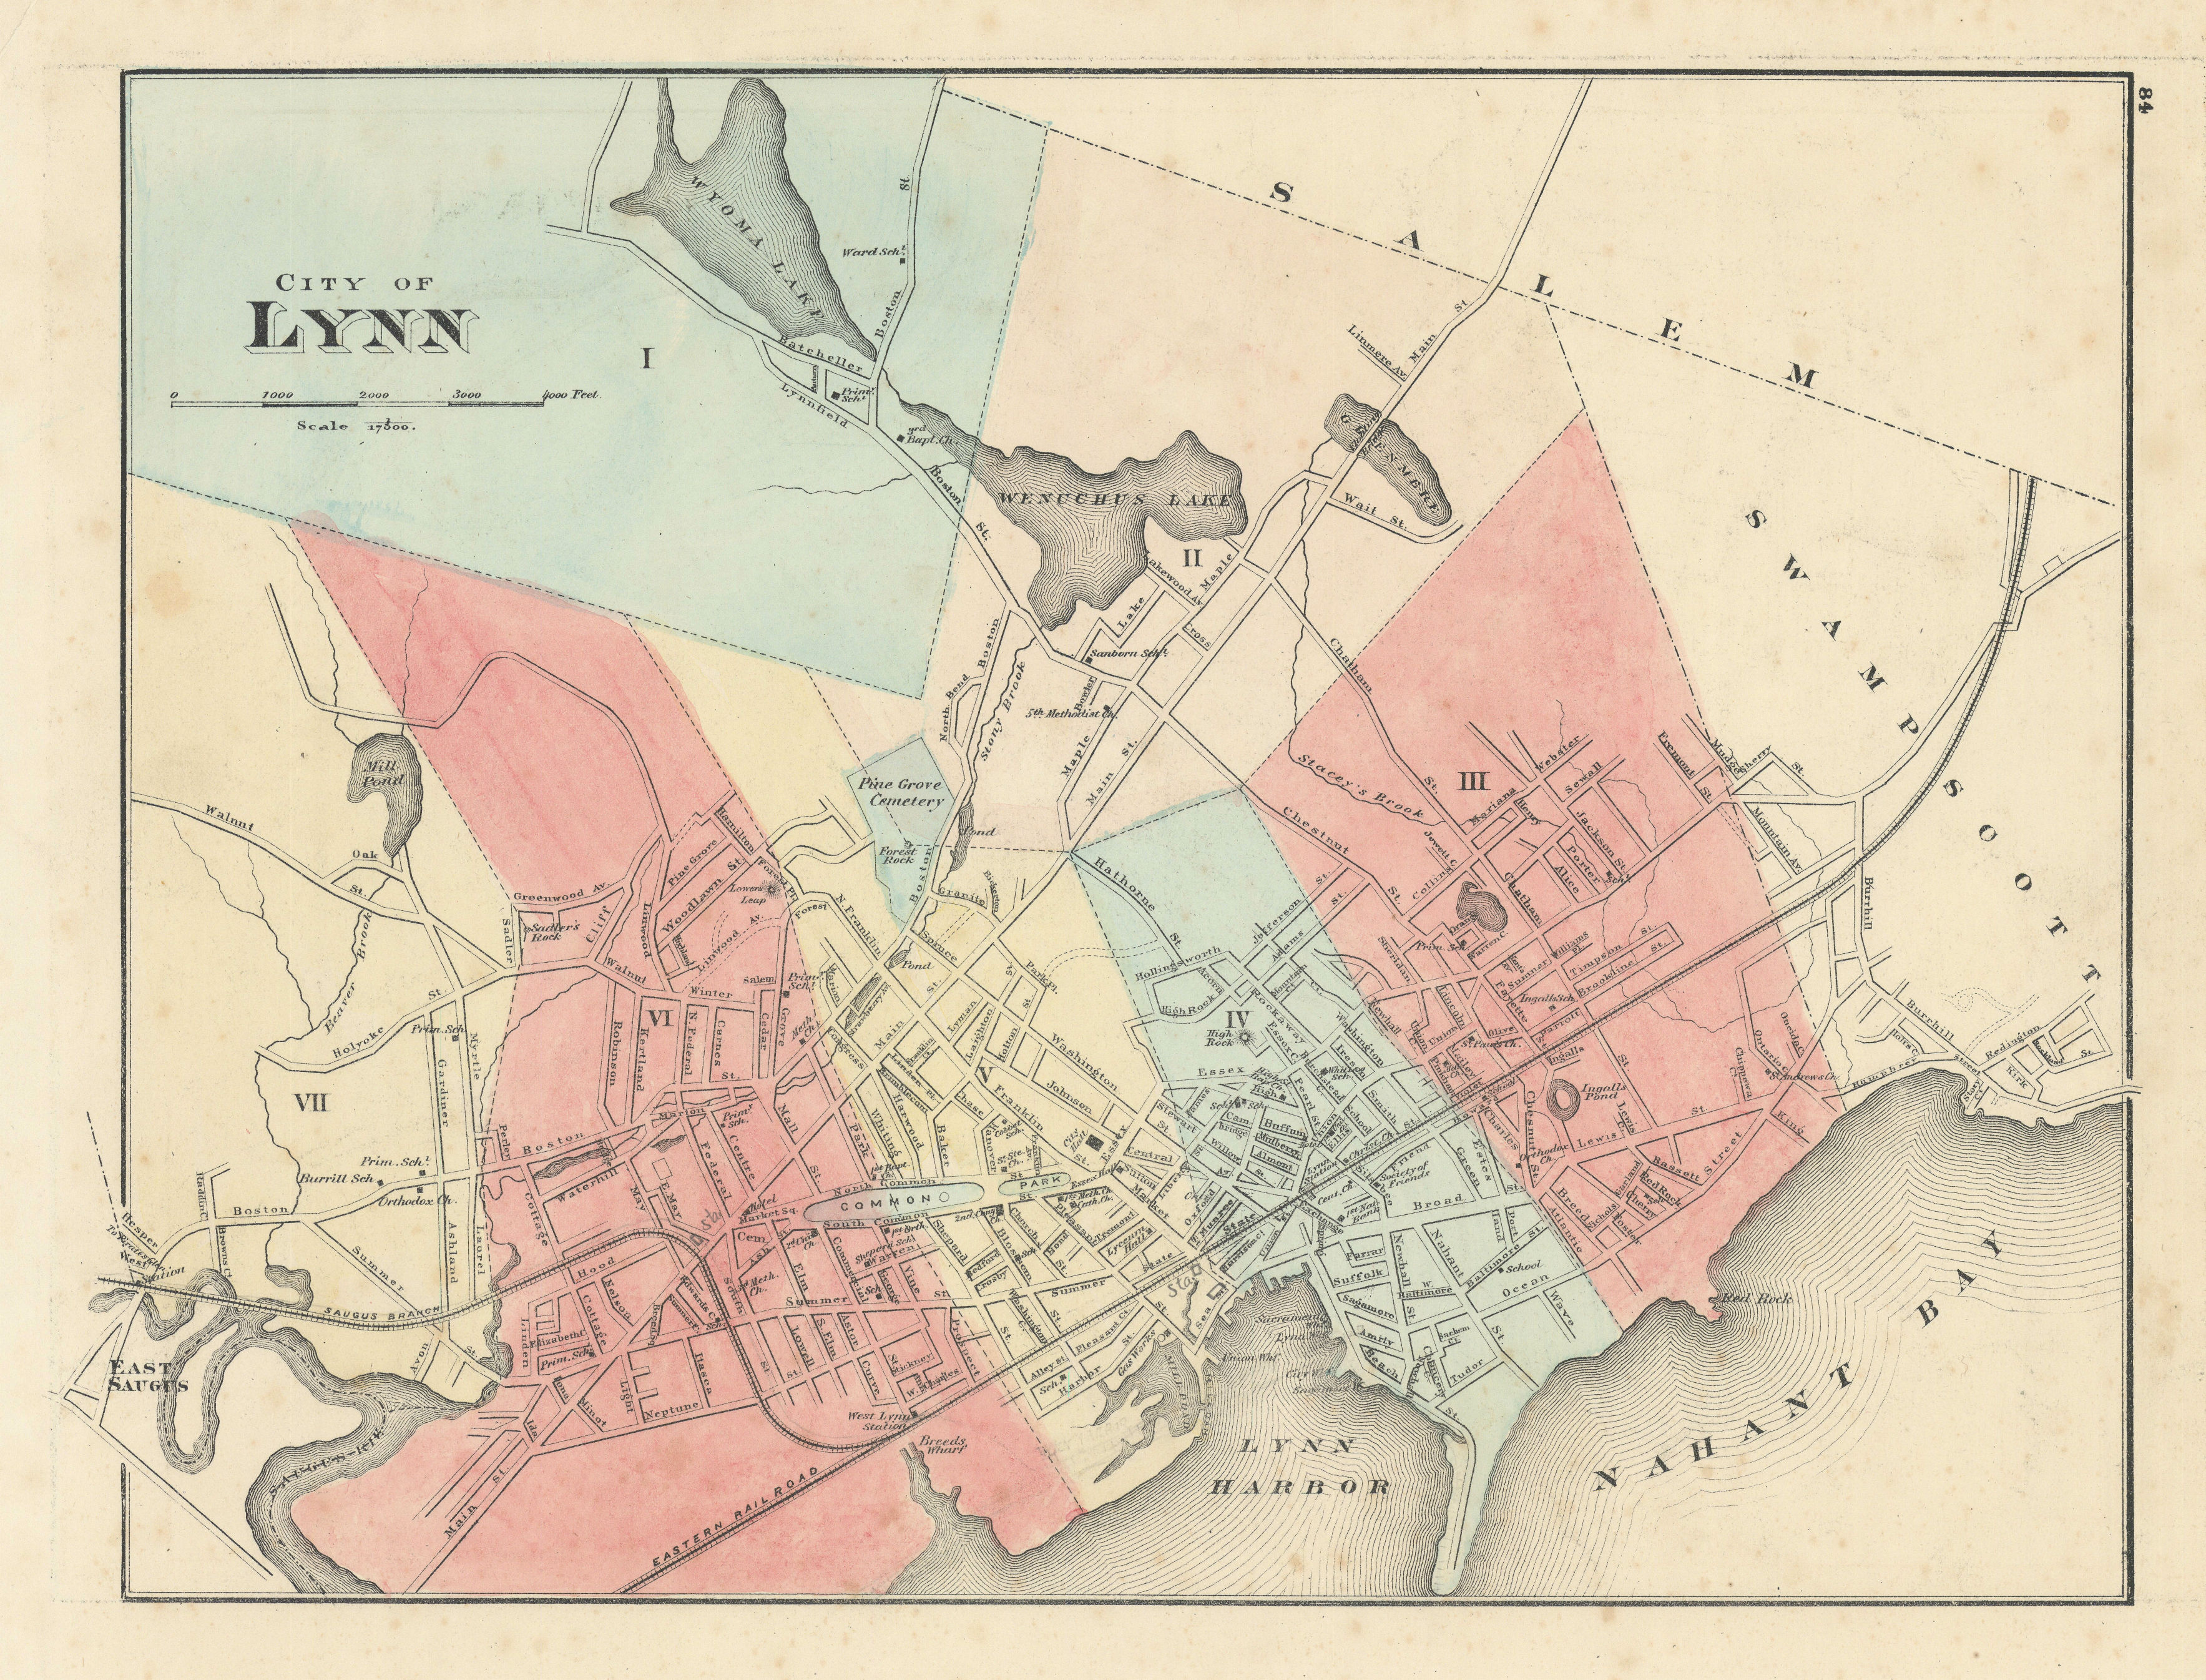 Associate Product City of Lynn, Massachusetts. Town plan. WALLING & GRAY 1871 old antique map